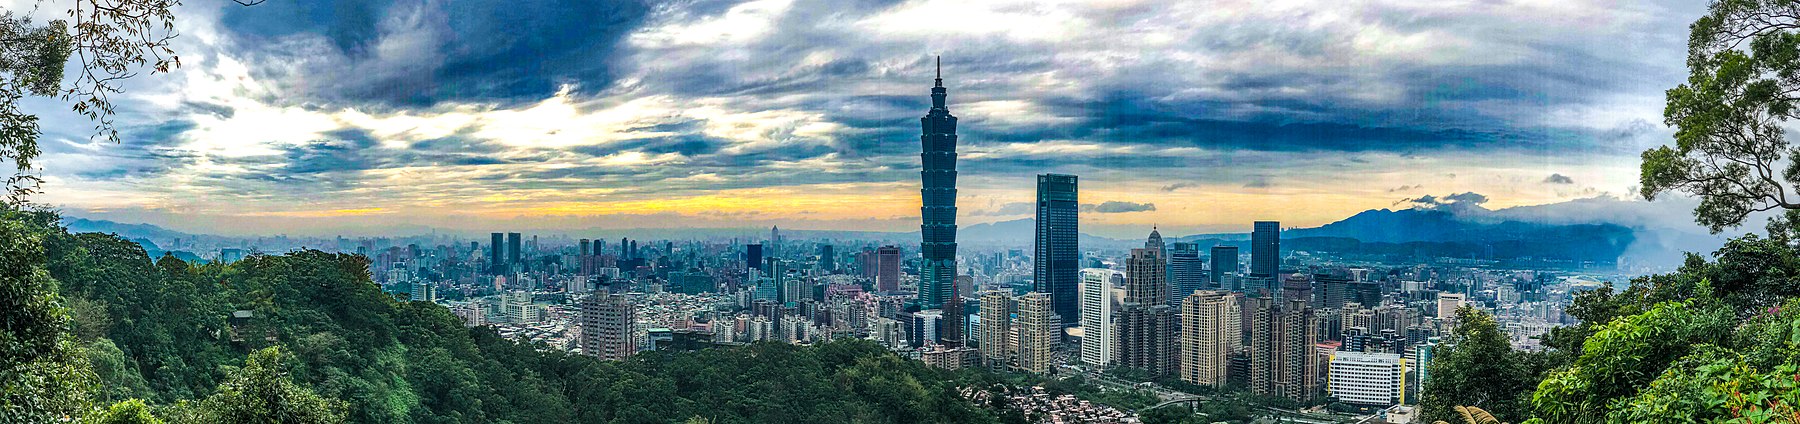 20180121 Taipei, Taiwan Skyline from Xiangshan.jpg